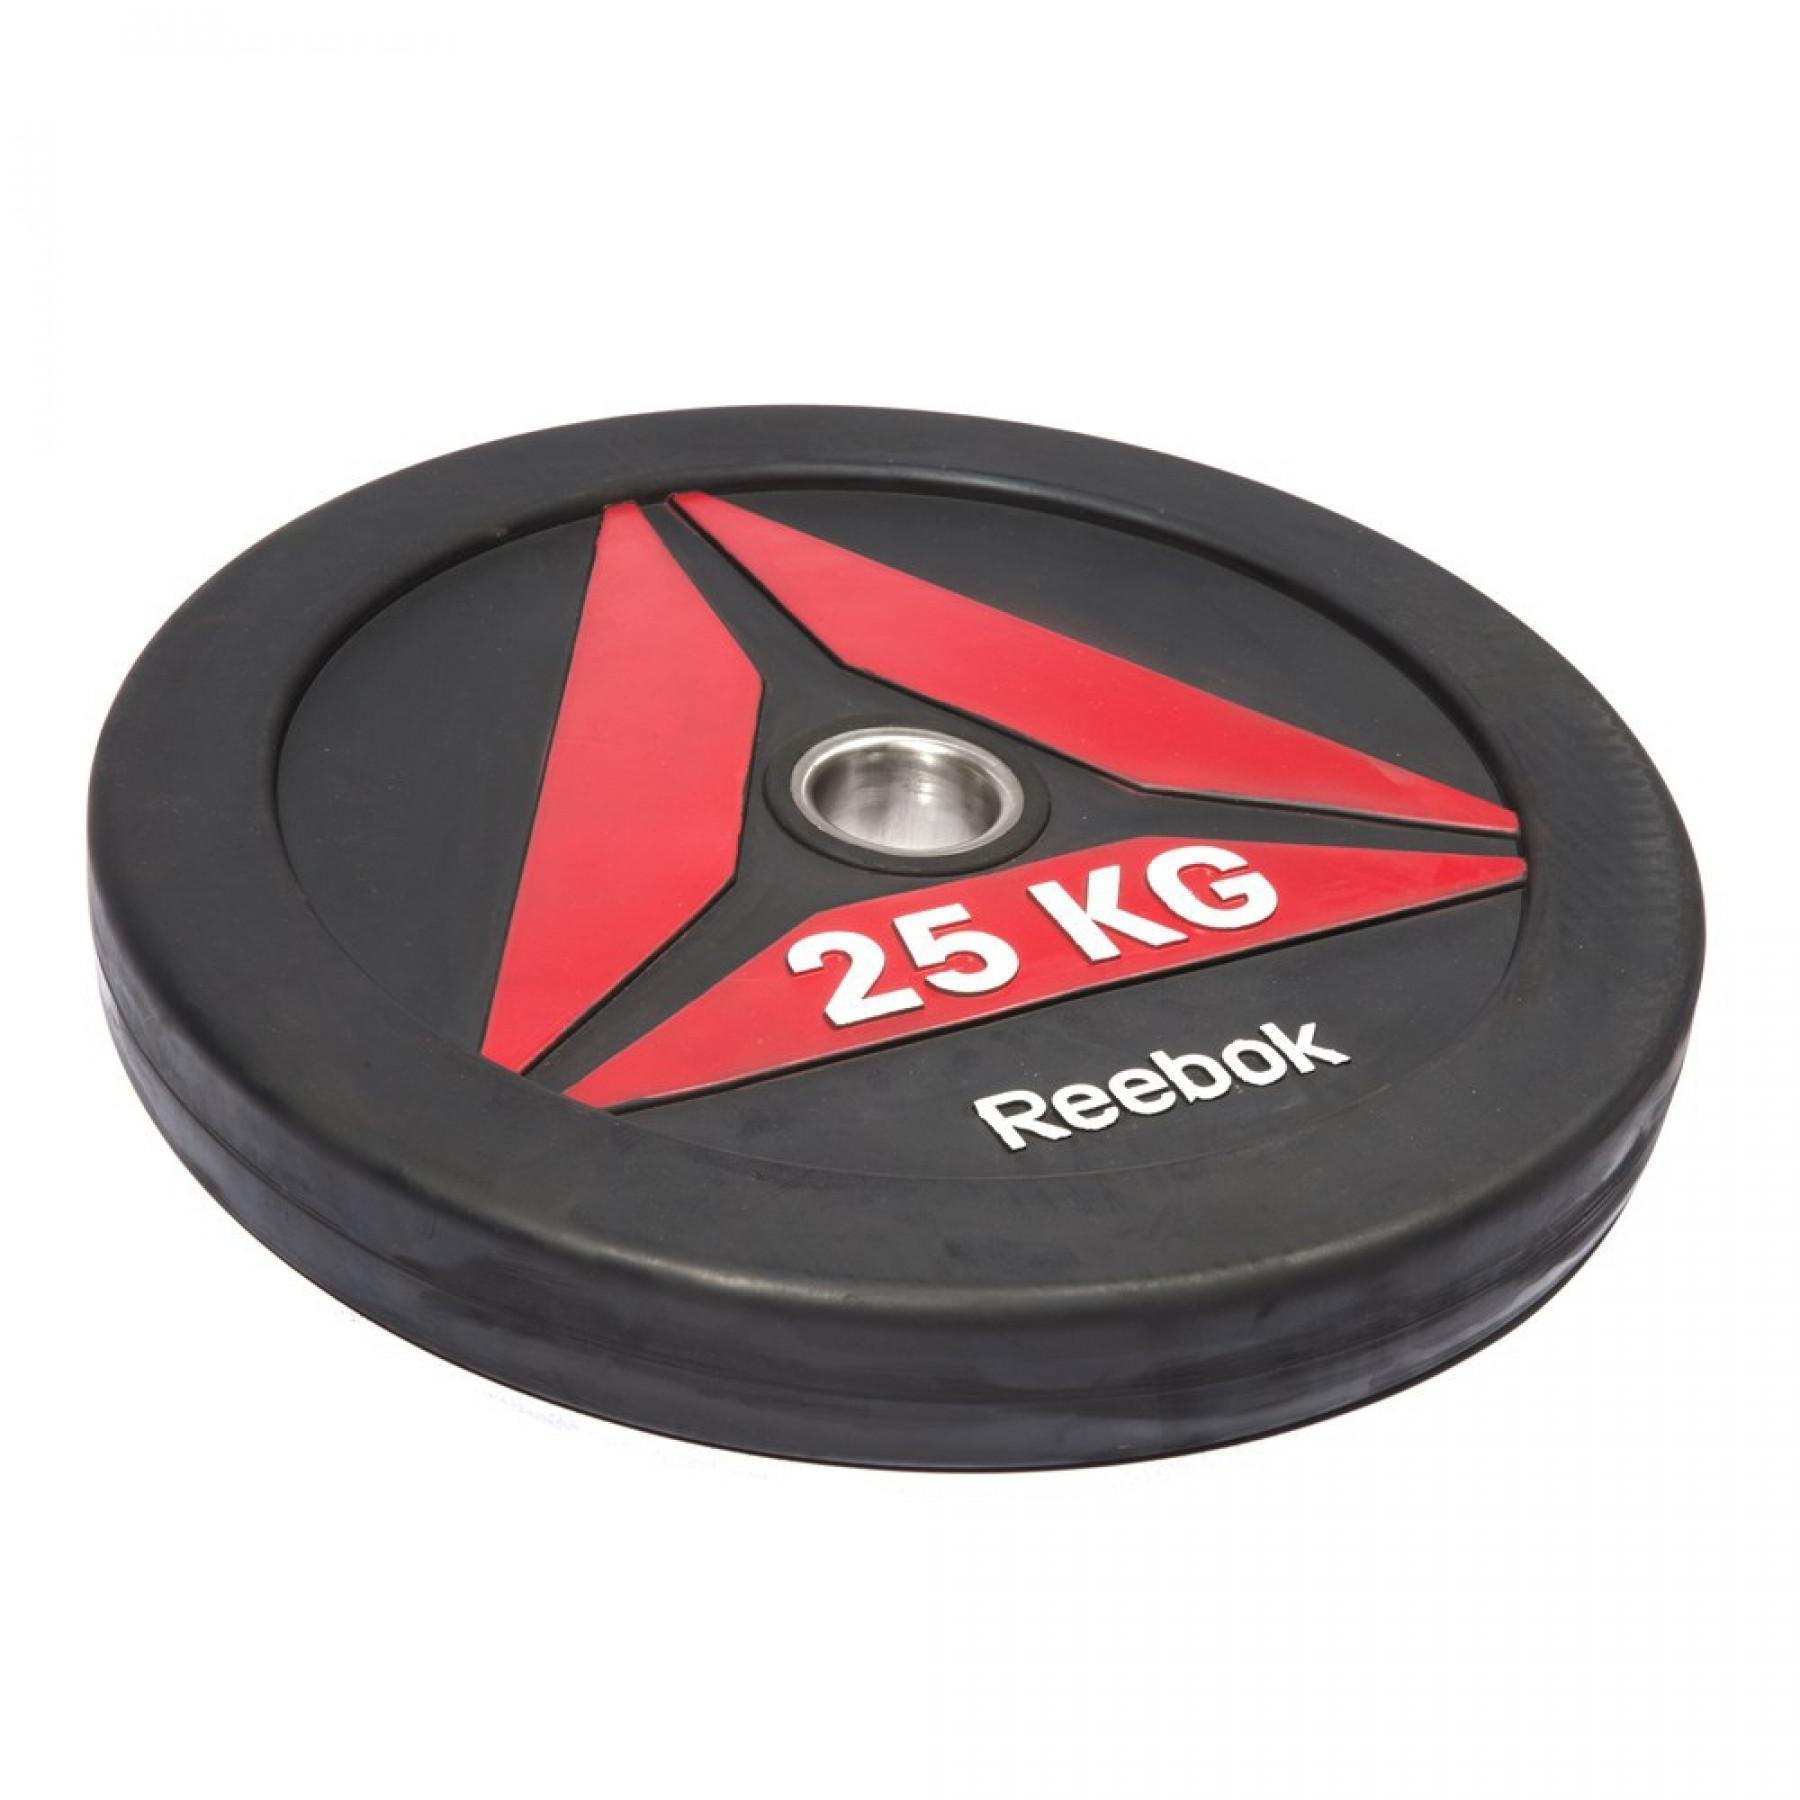 Bumper disc Reebok 5 kg